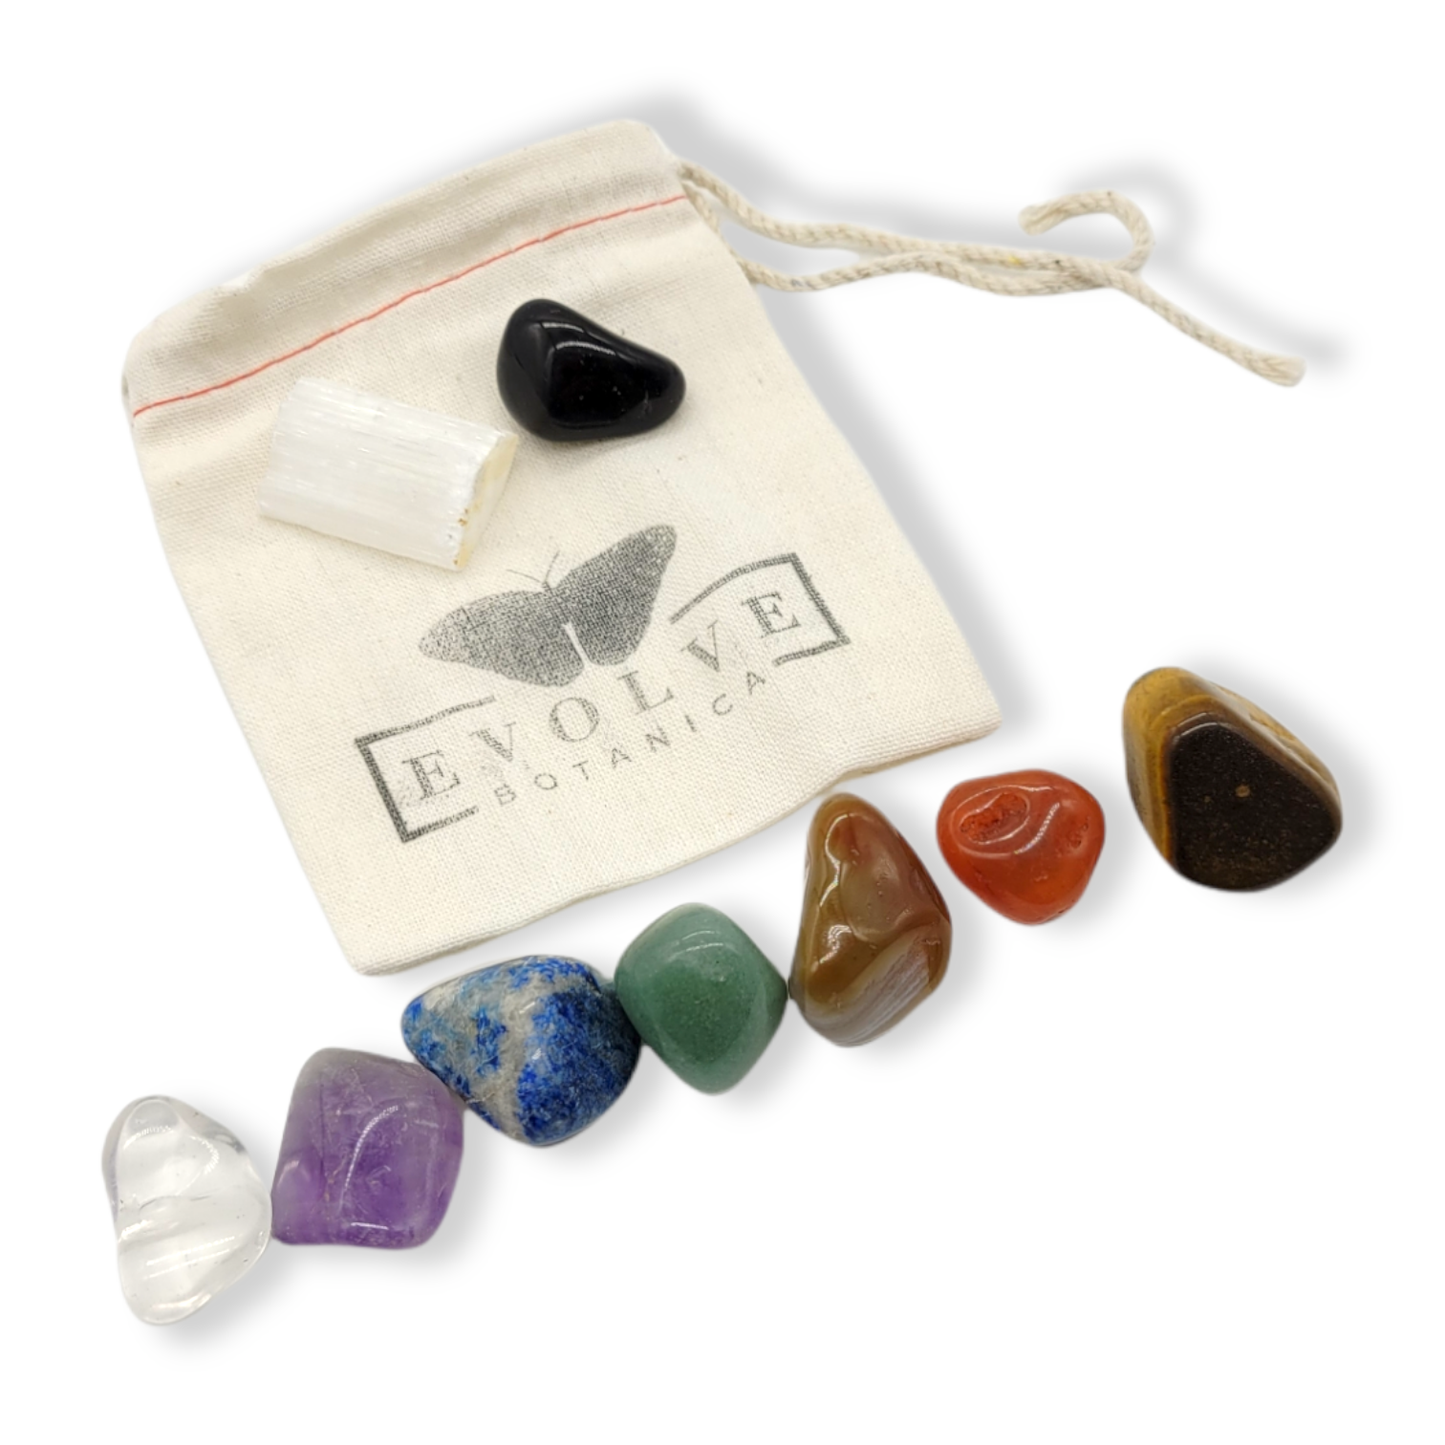 Evolve Botanica - Chakra Balance and Cleanse Stone Kit (Gift Set)